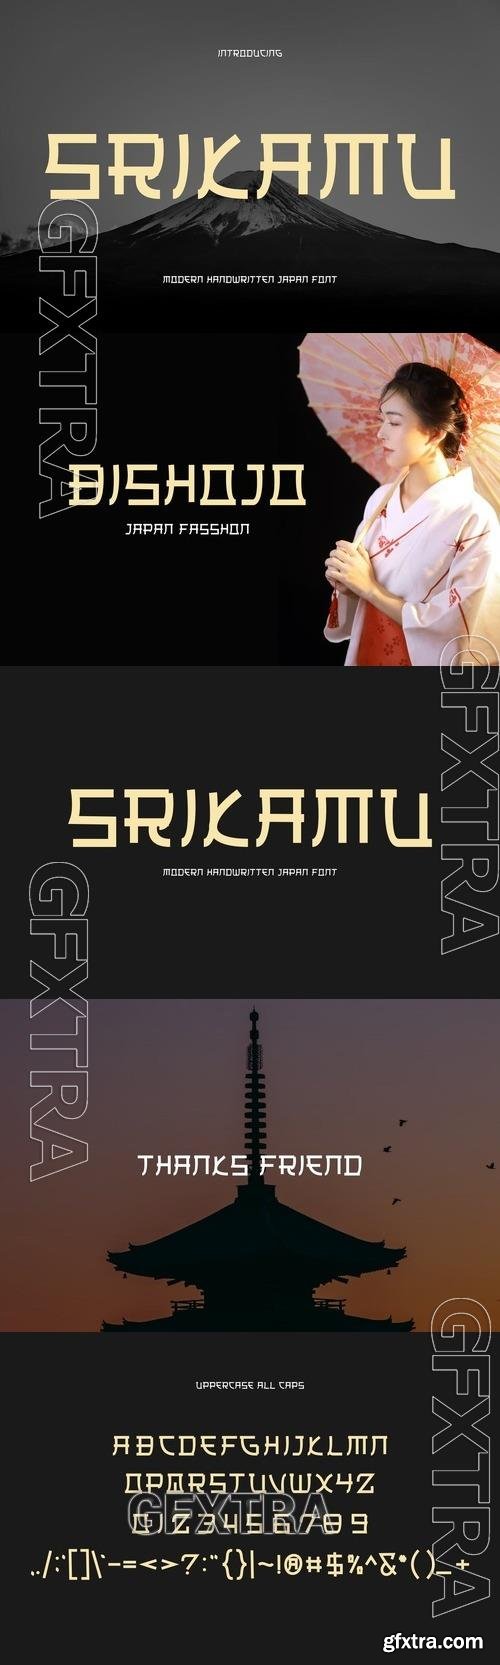 Srikamu - Modern Japanese Style 2PMRBD5